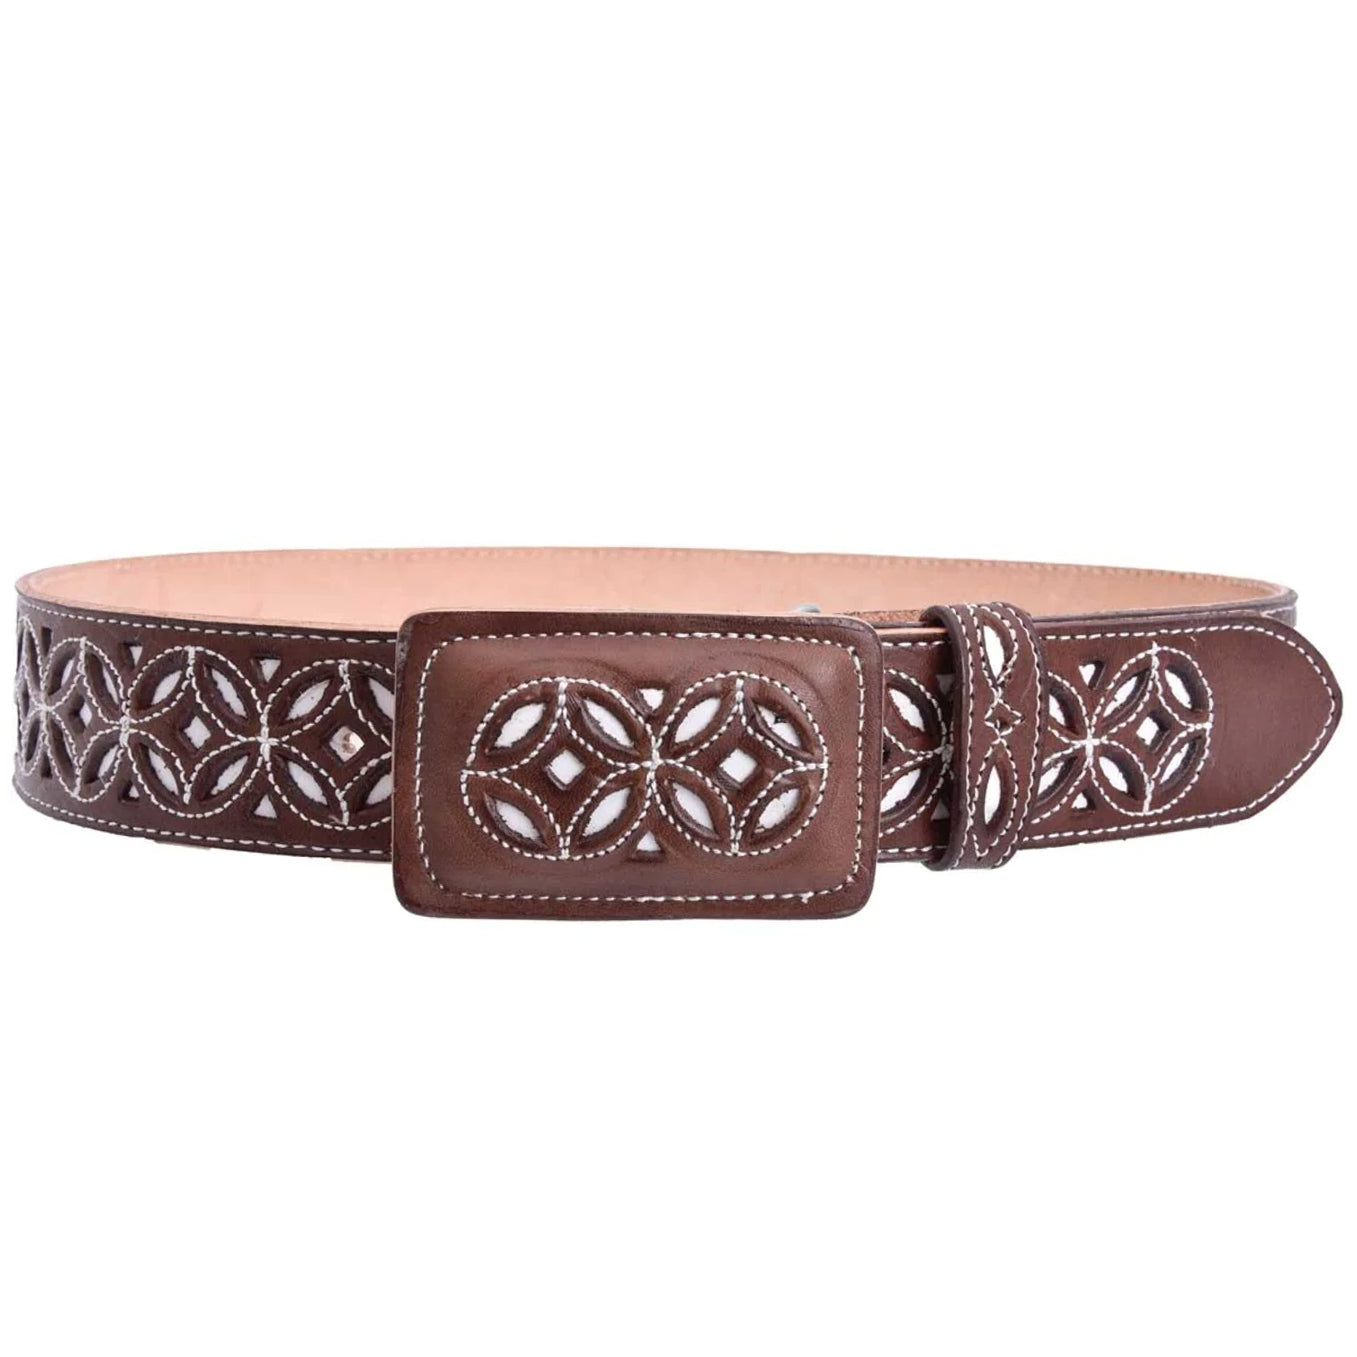 Leather Carved Cowboy Belts